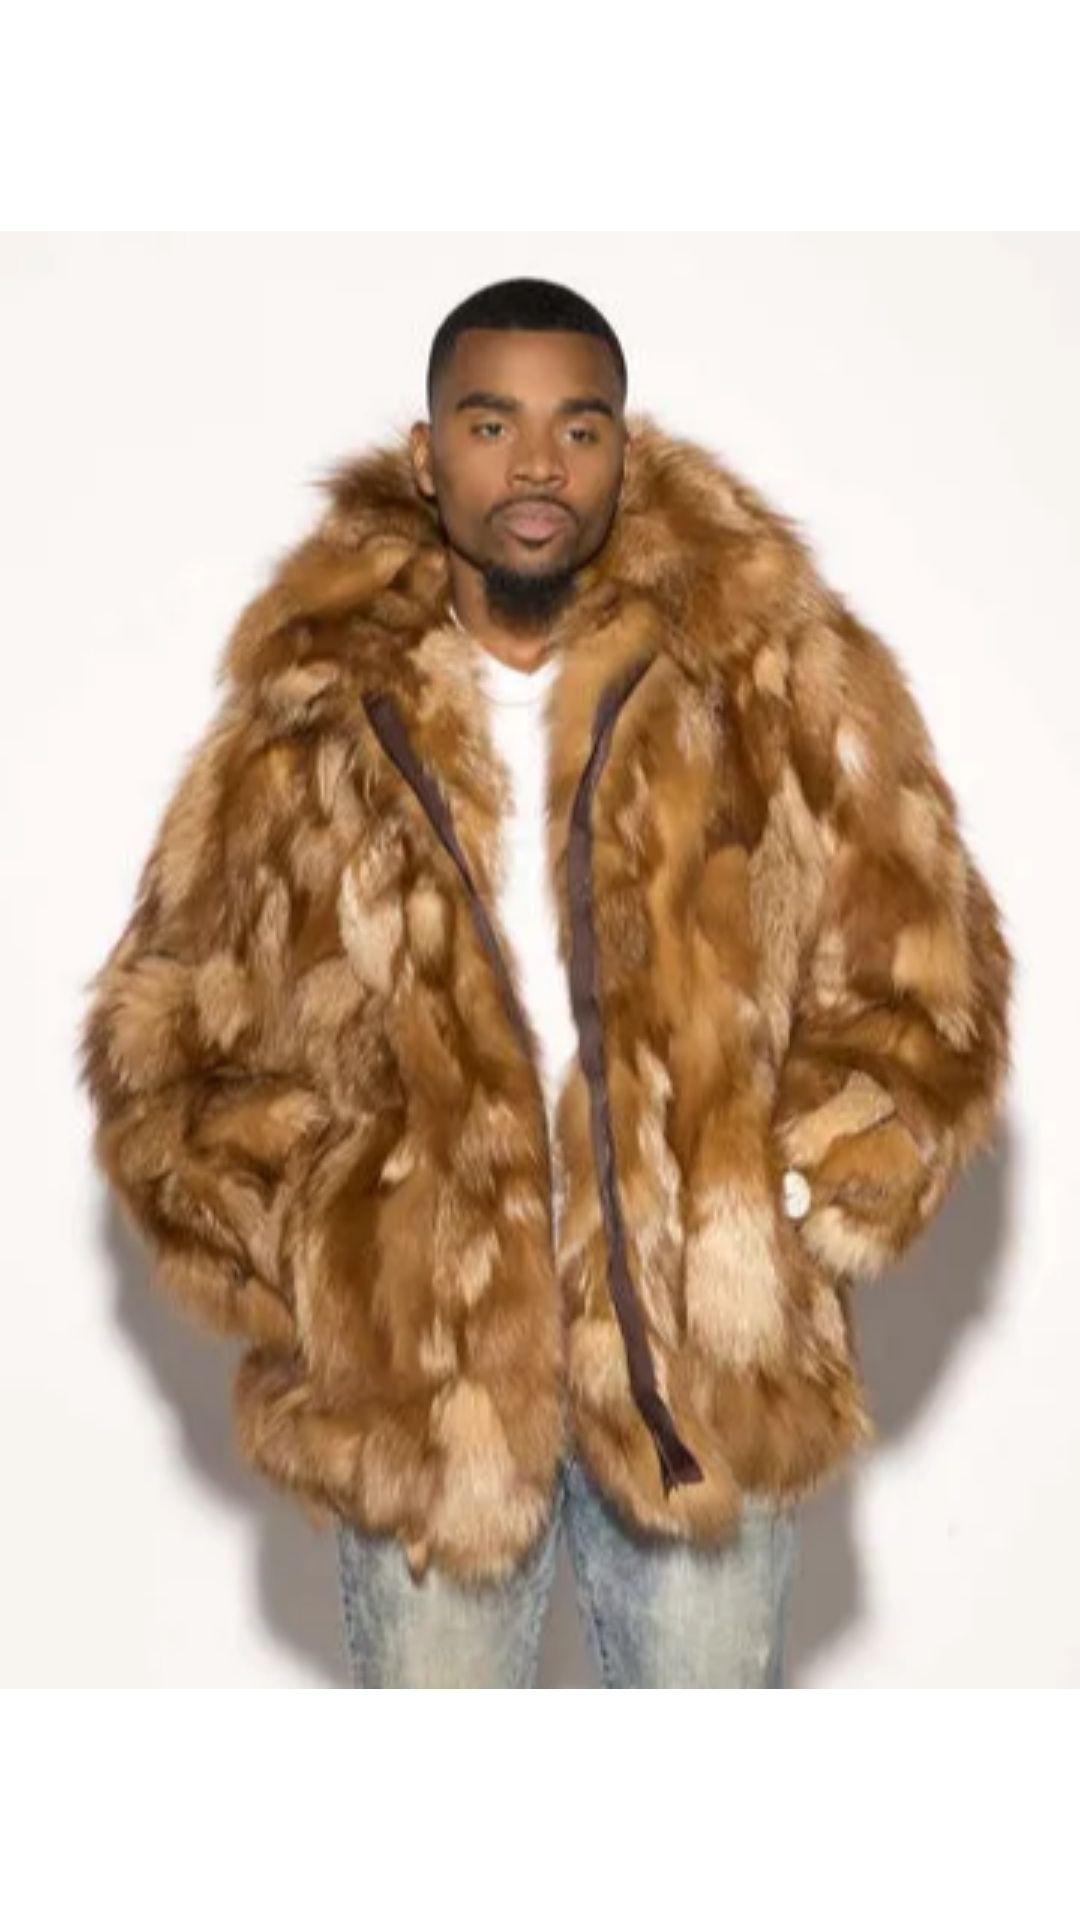 “Exploring the Stylish Sophistication of Men’s Fur Jackets”